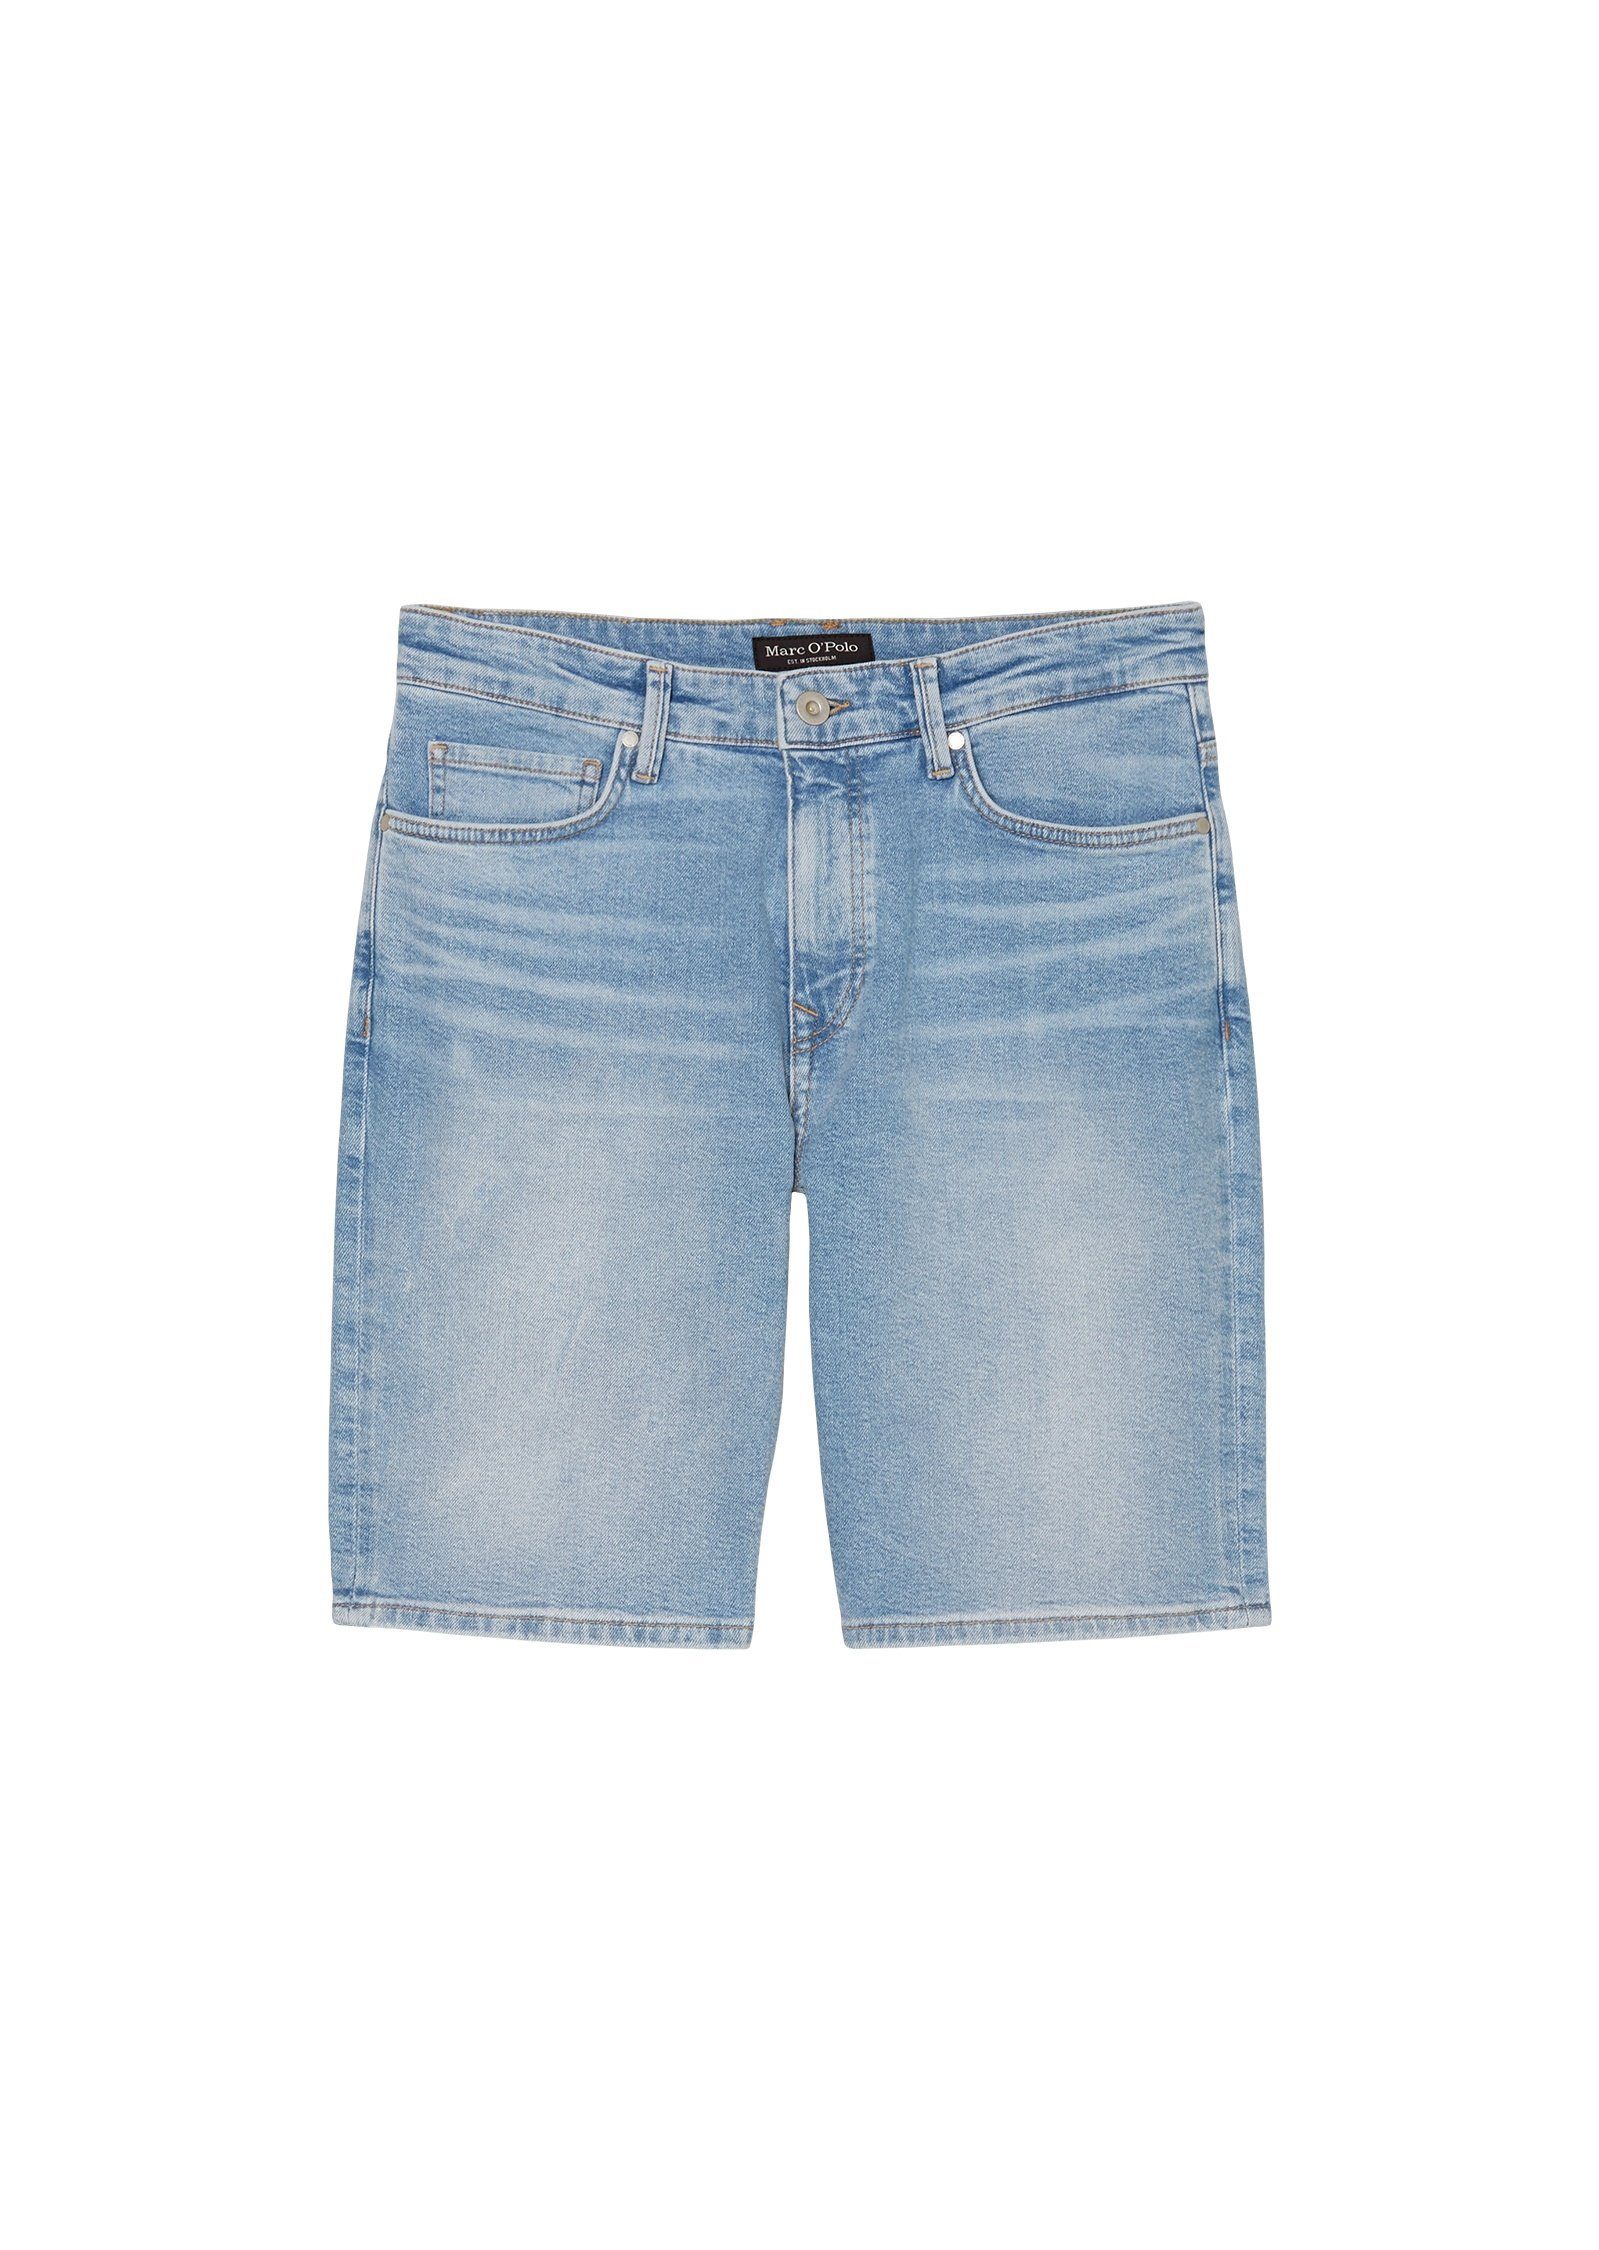 Marc O'Polo Shorts aus hellblau Authentic-Stretch-Denim-Qualität